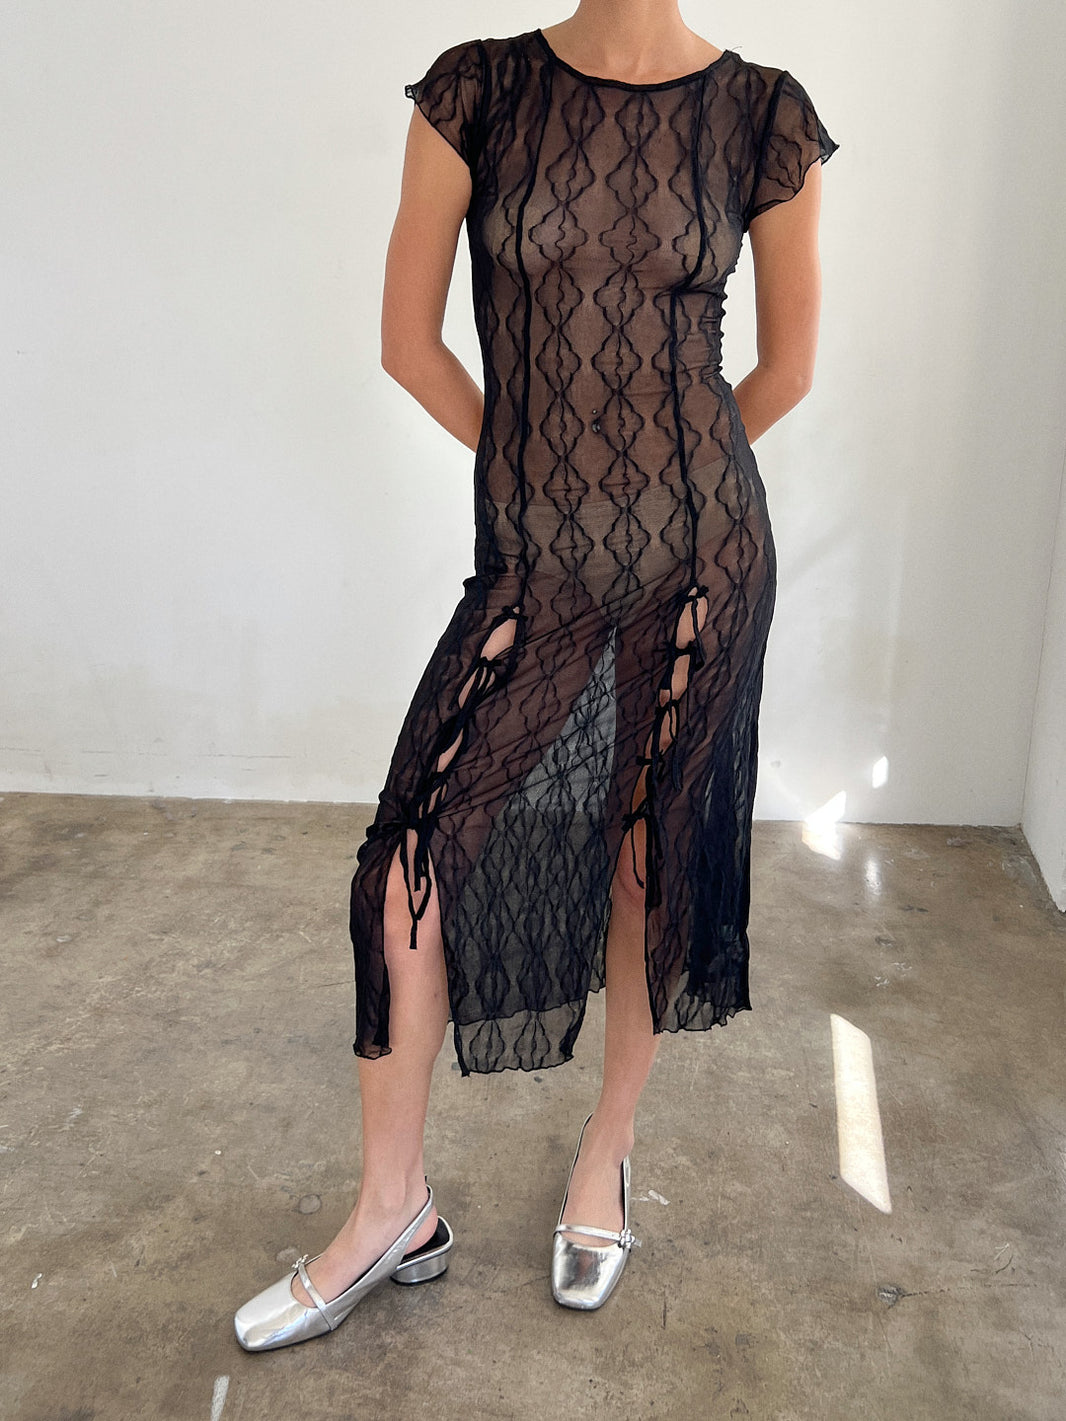 Dresses - New Arrivals | Lisa Says Gah